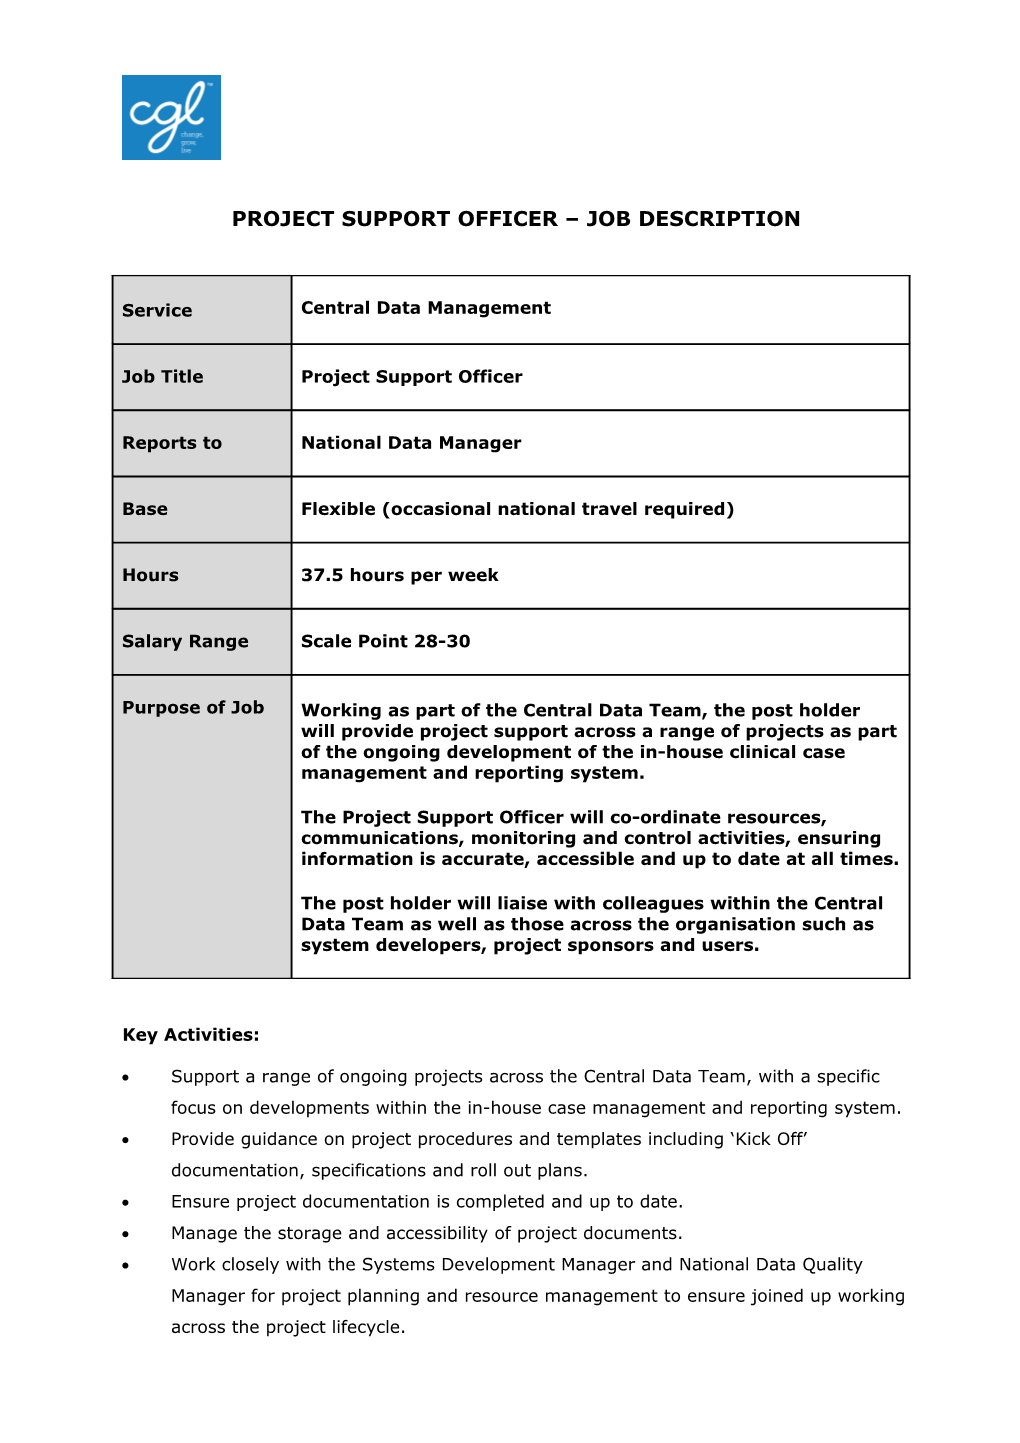 Project Support Officer Job Description